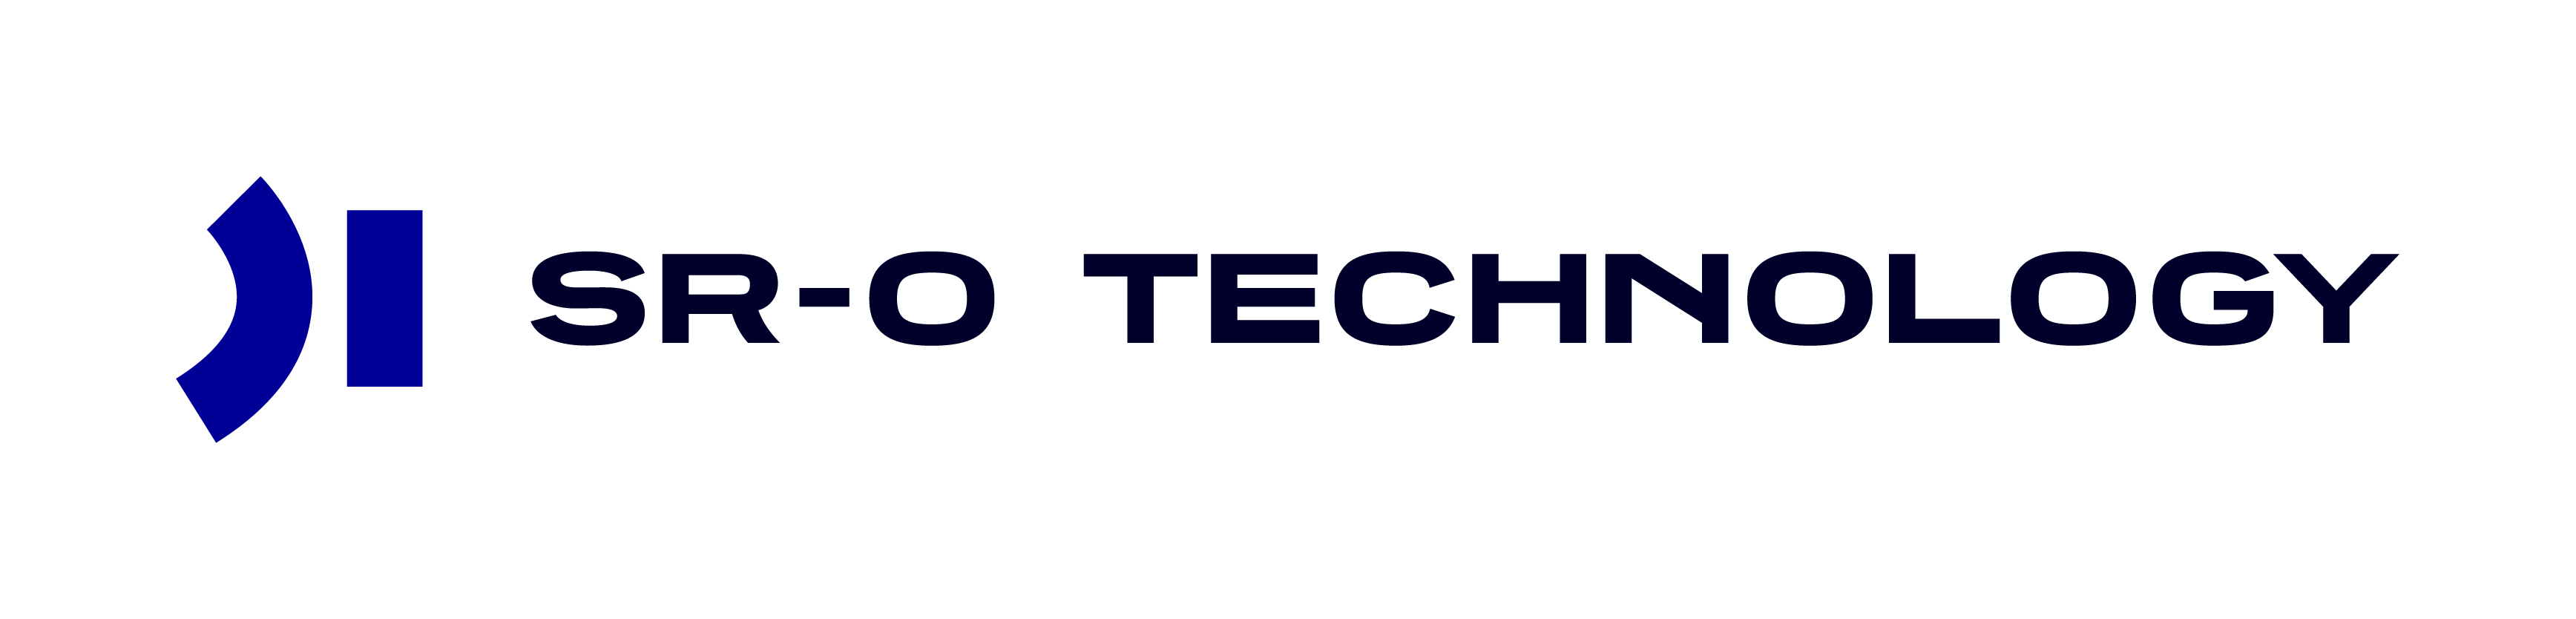 sr-o_technology_logo_macwell